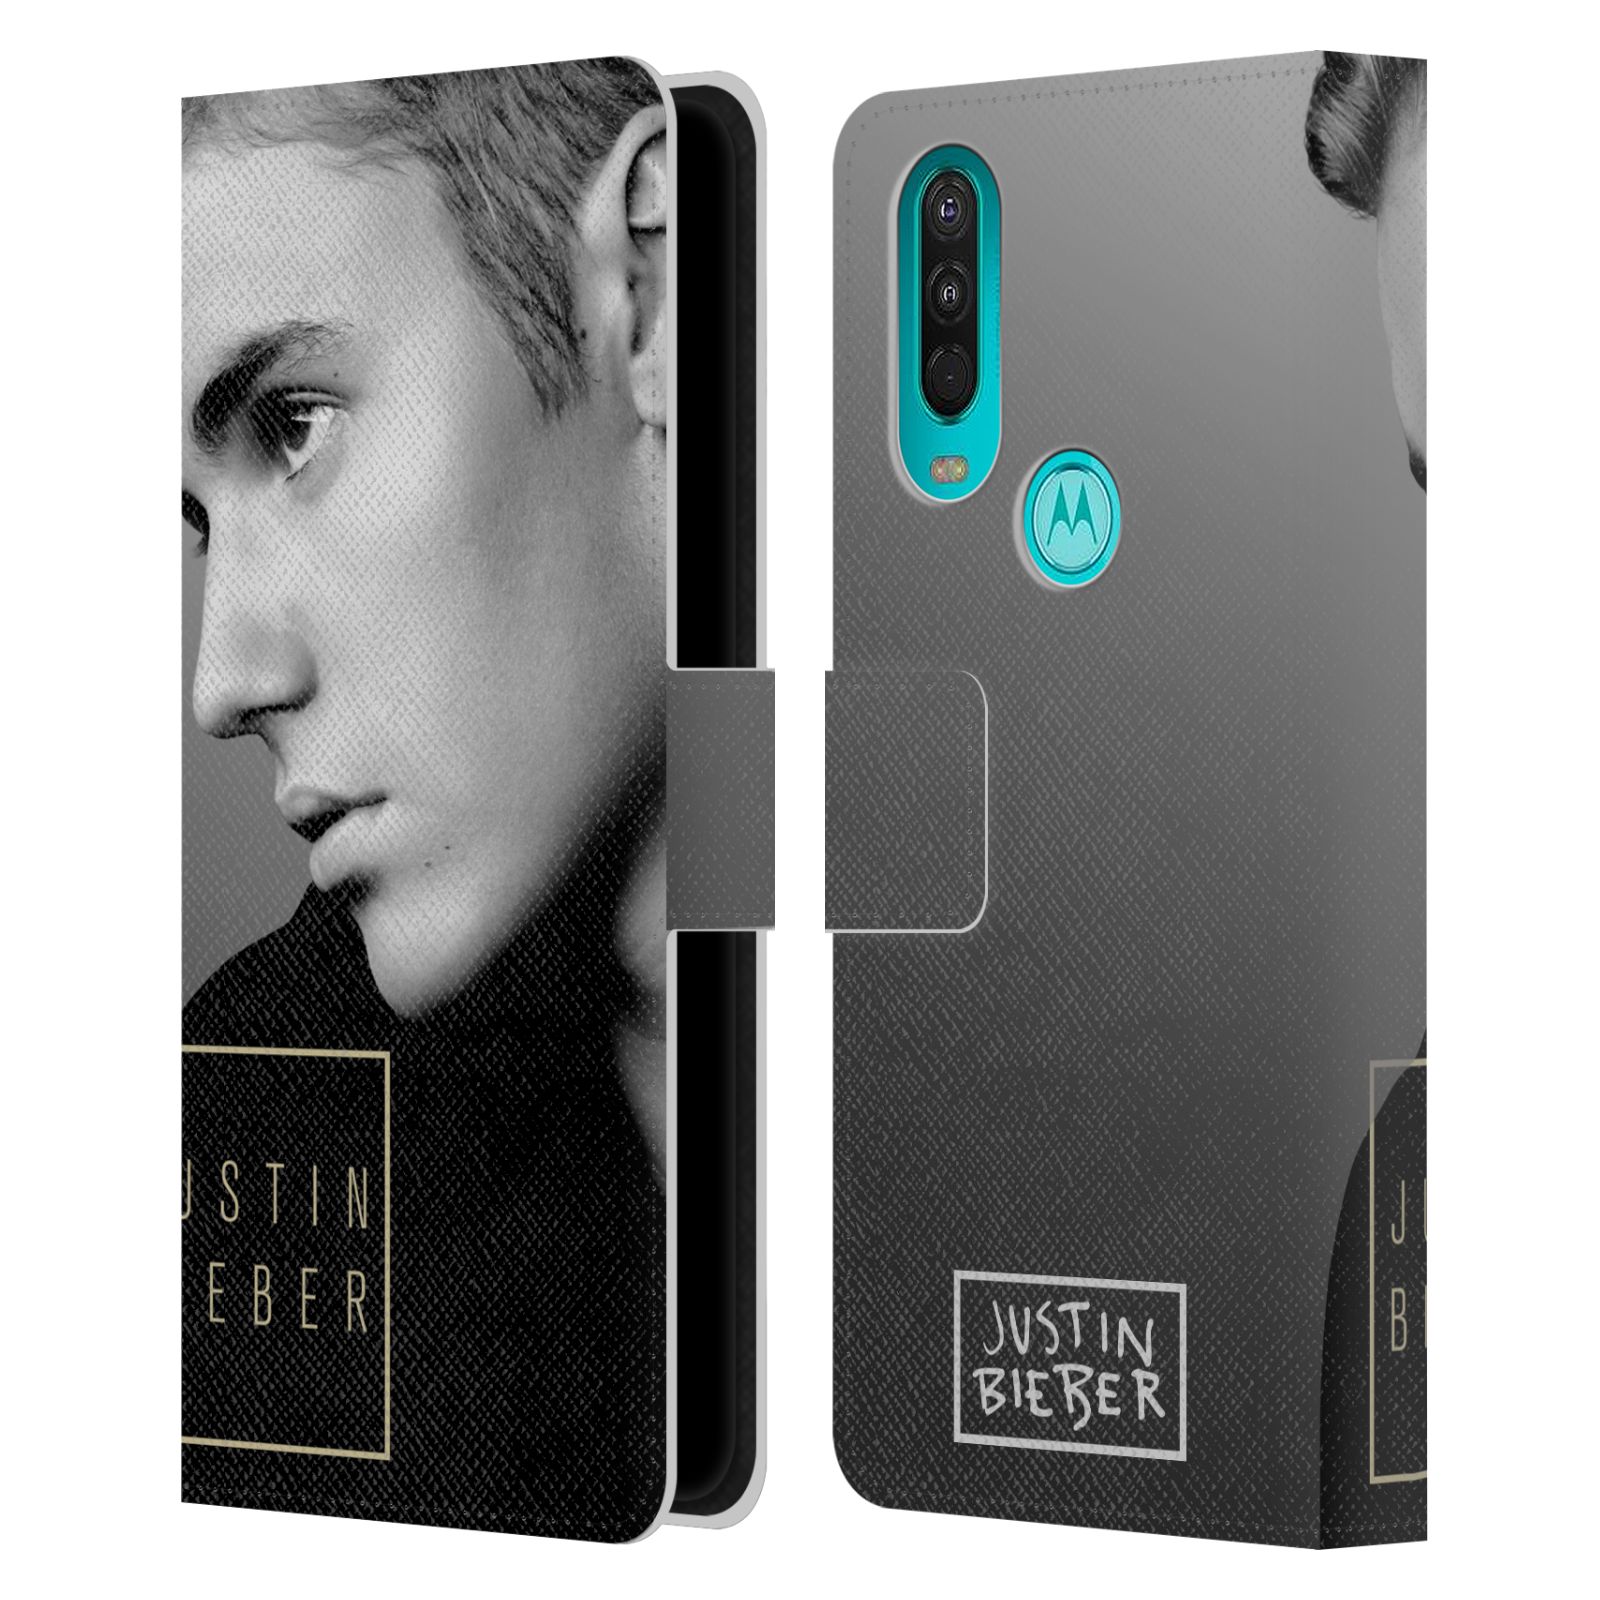 Pouzdro HEAD CASE na mobil Motorola One Action  Justin Bieber - černobílé zrcadlo